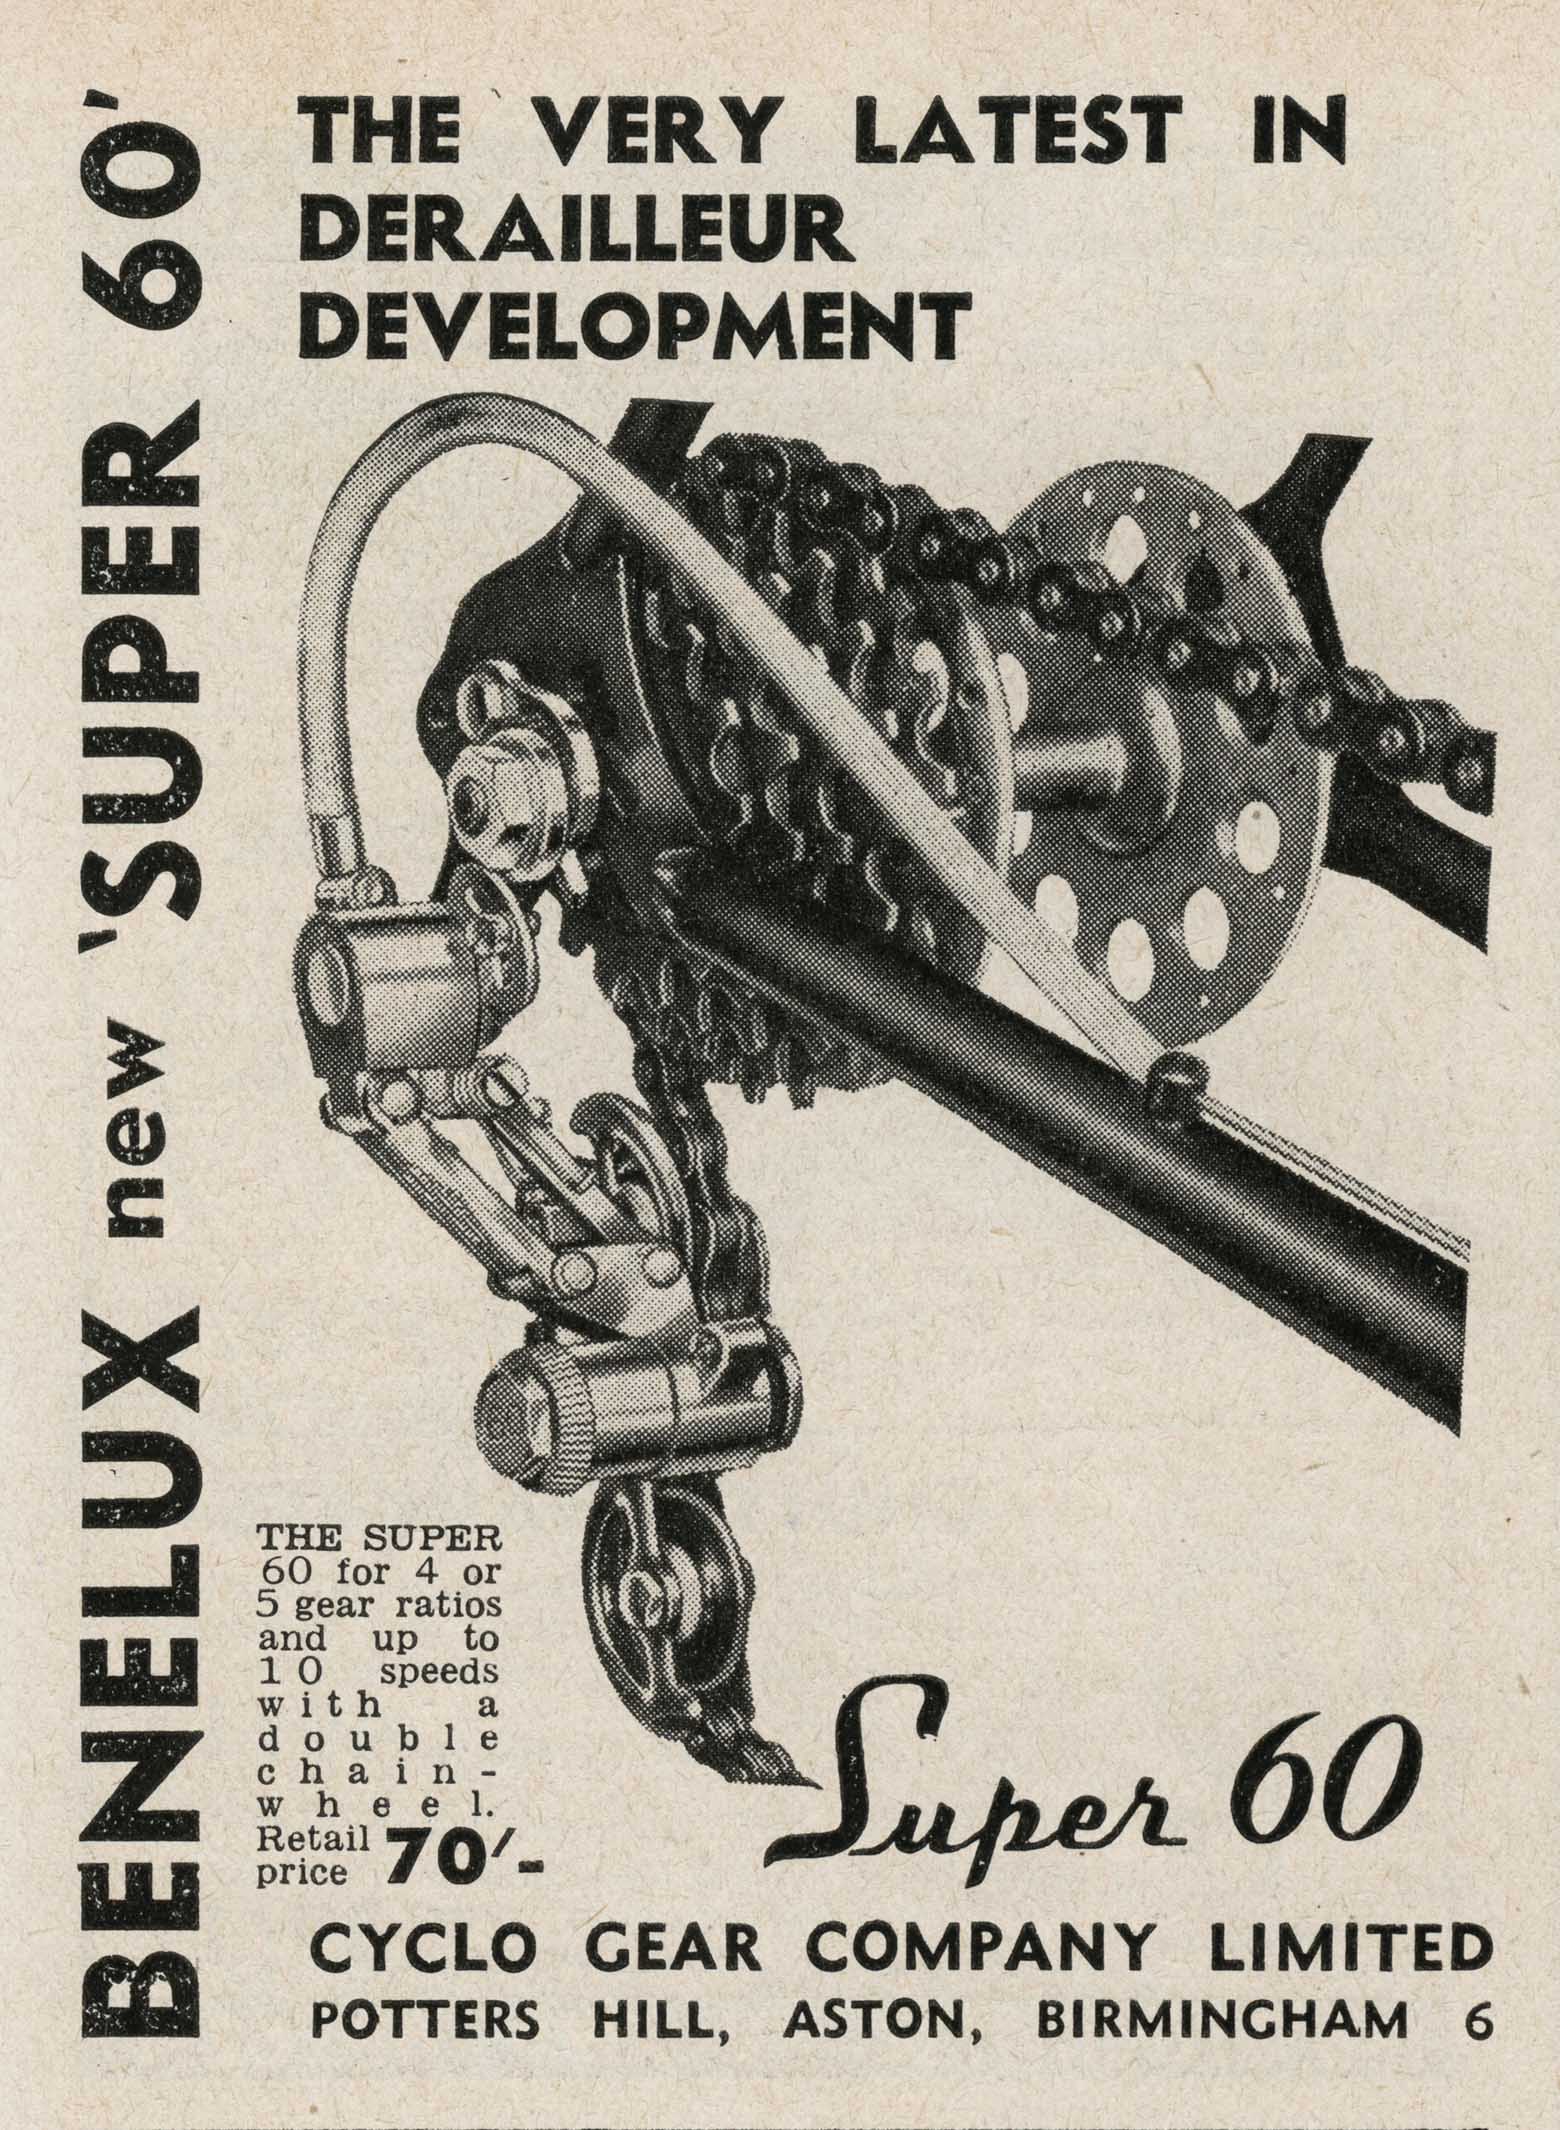 Sporting Cyclist September 1960 Cyclo Gear Company advert main image